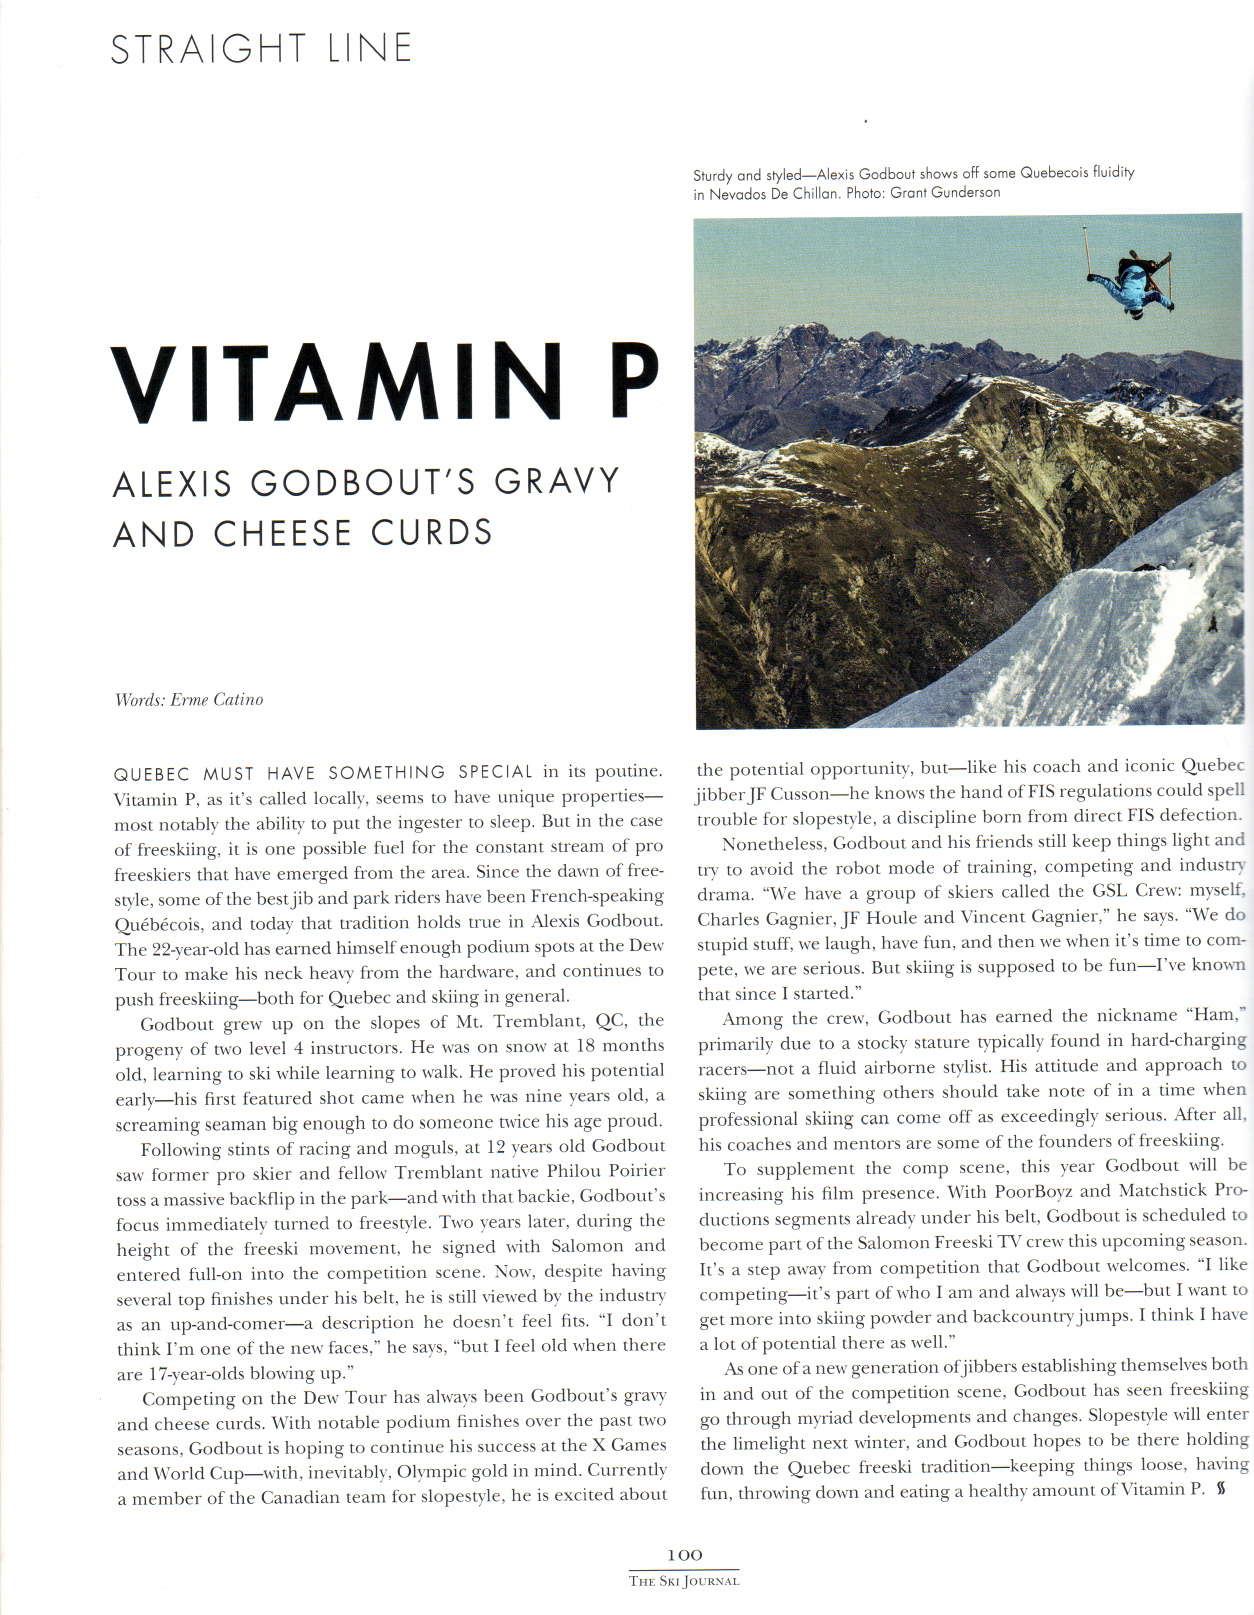 VitaminP.jpg